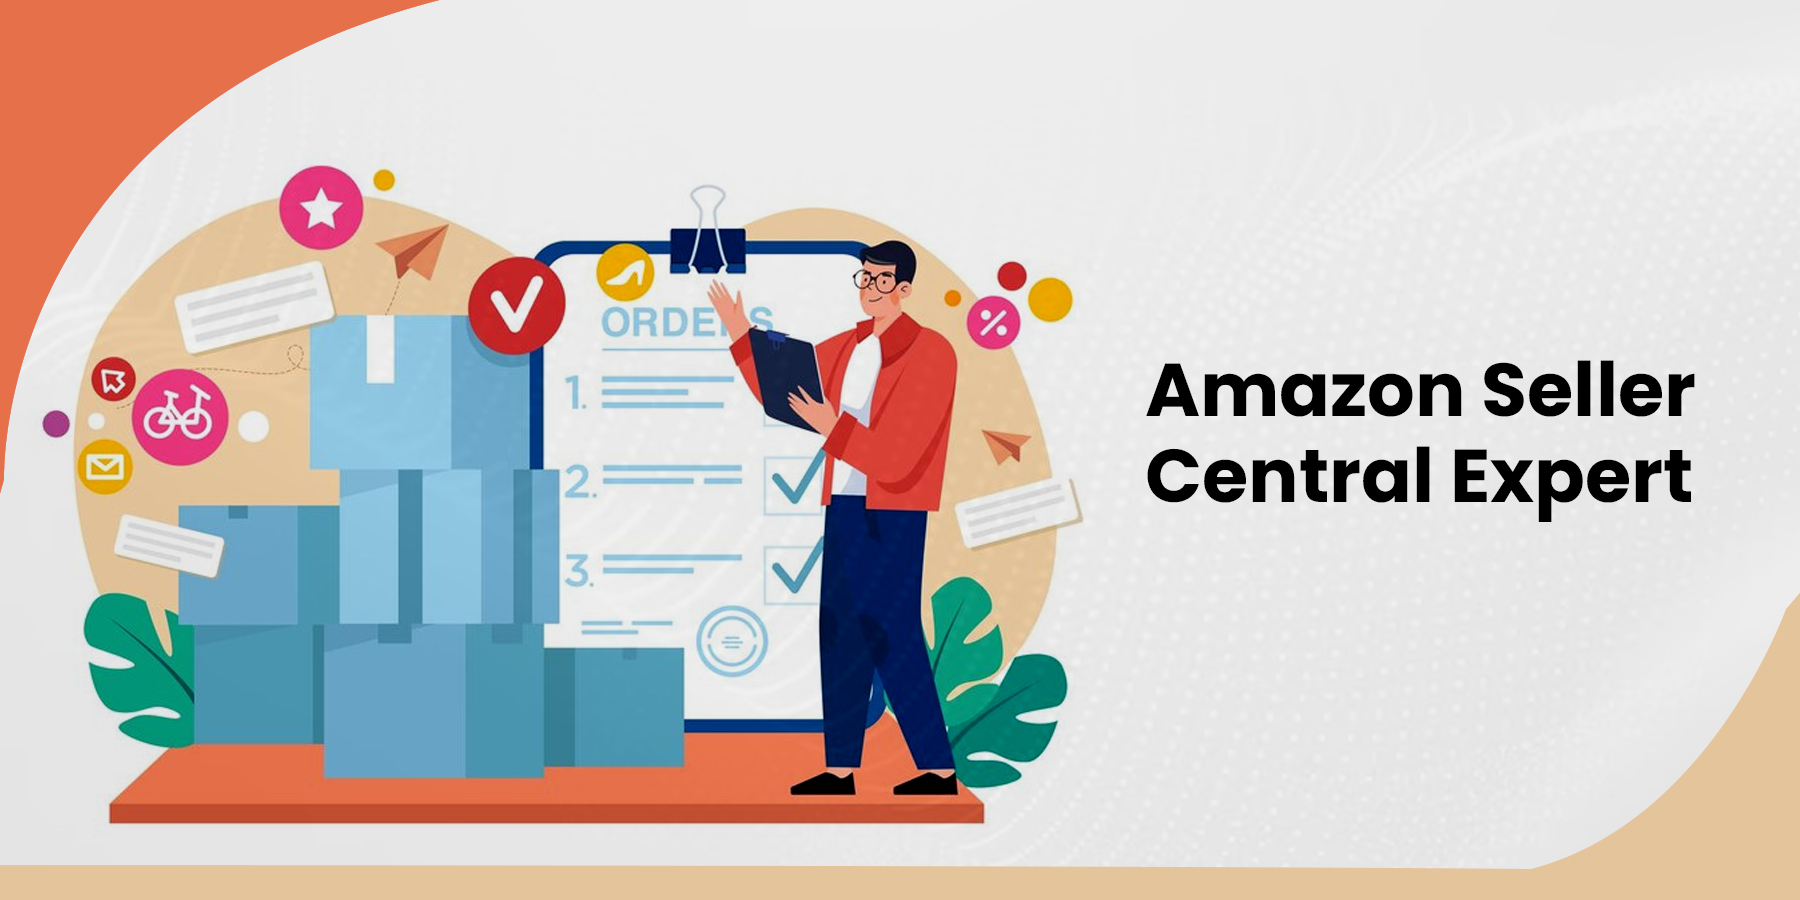 Amazon Seller Central Expert